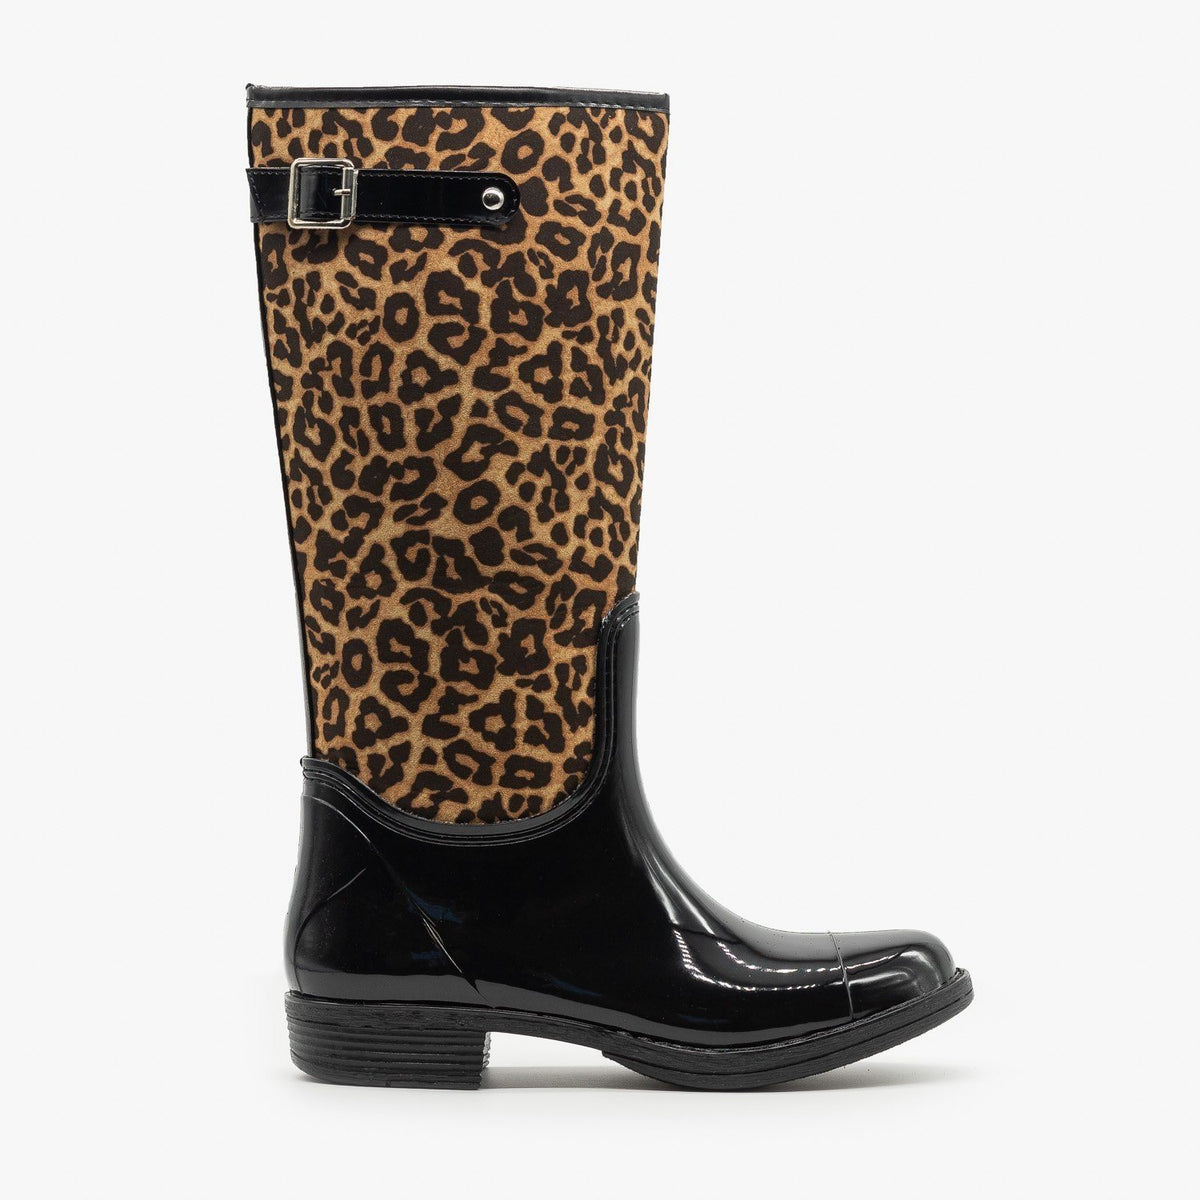 Leopard Print Rain Boots - Qupid Shoes 